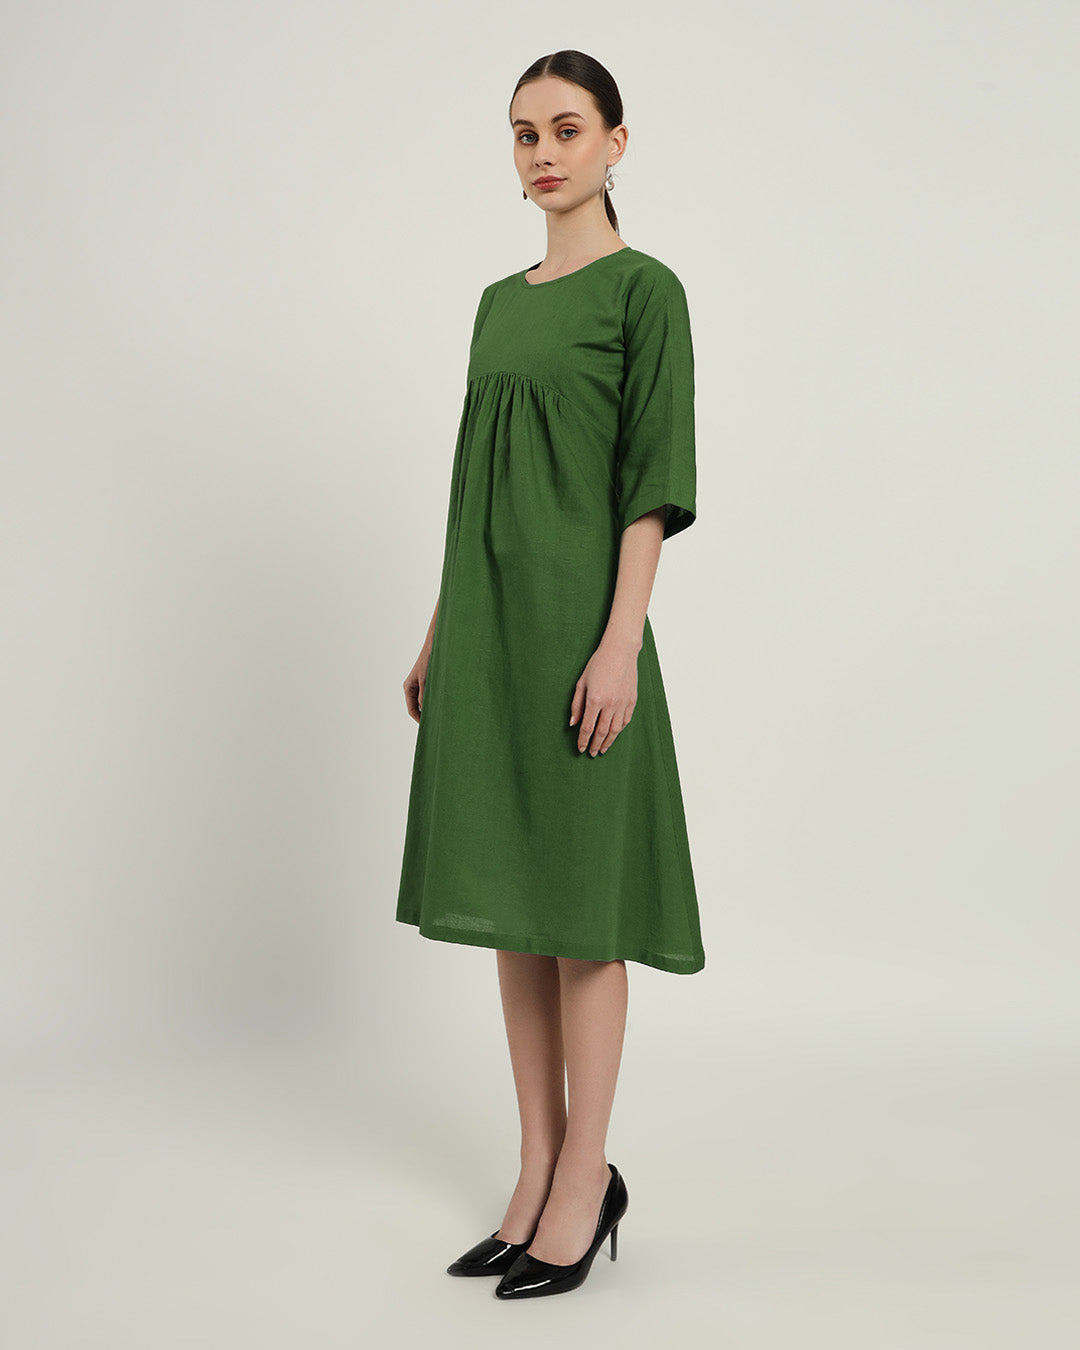 The Monrovia Emerald Cotton Dress